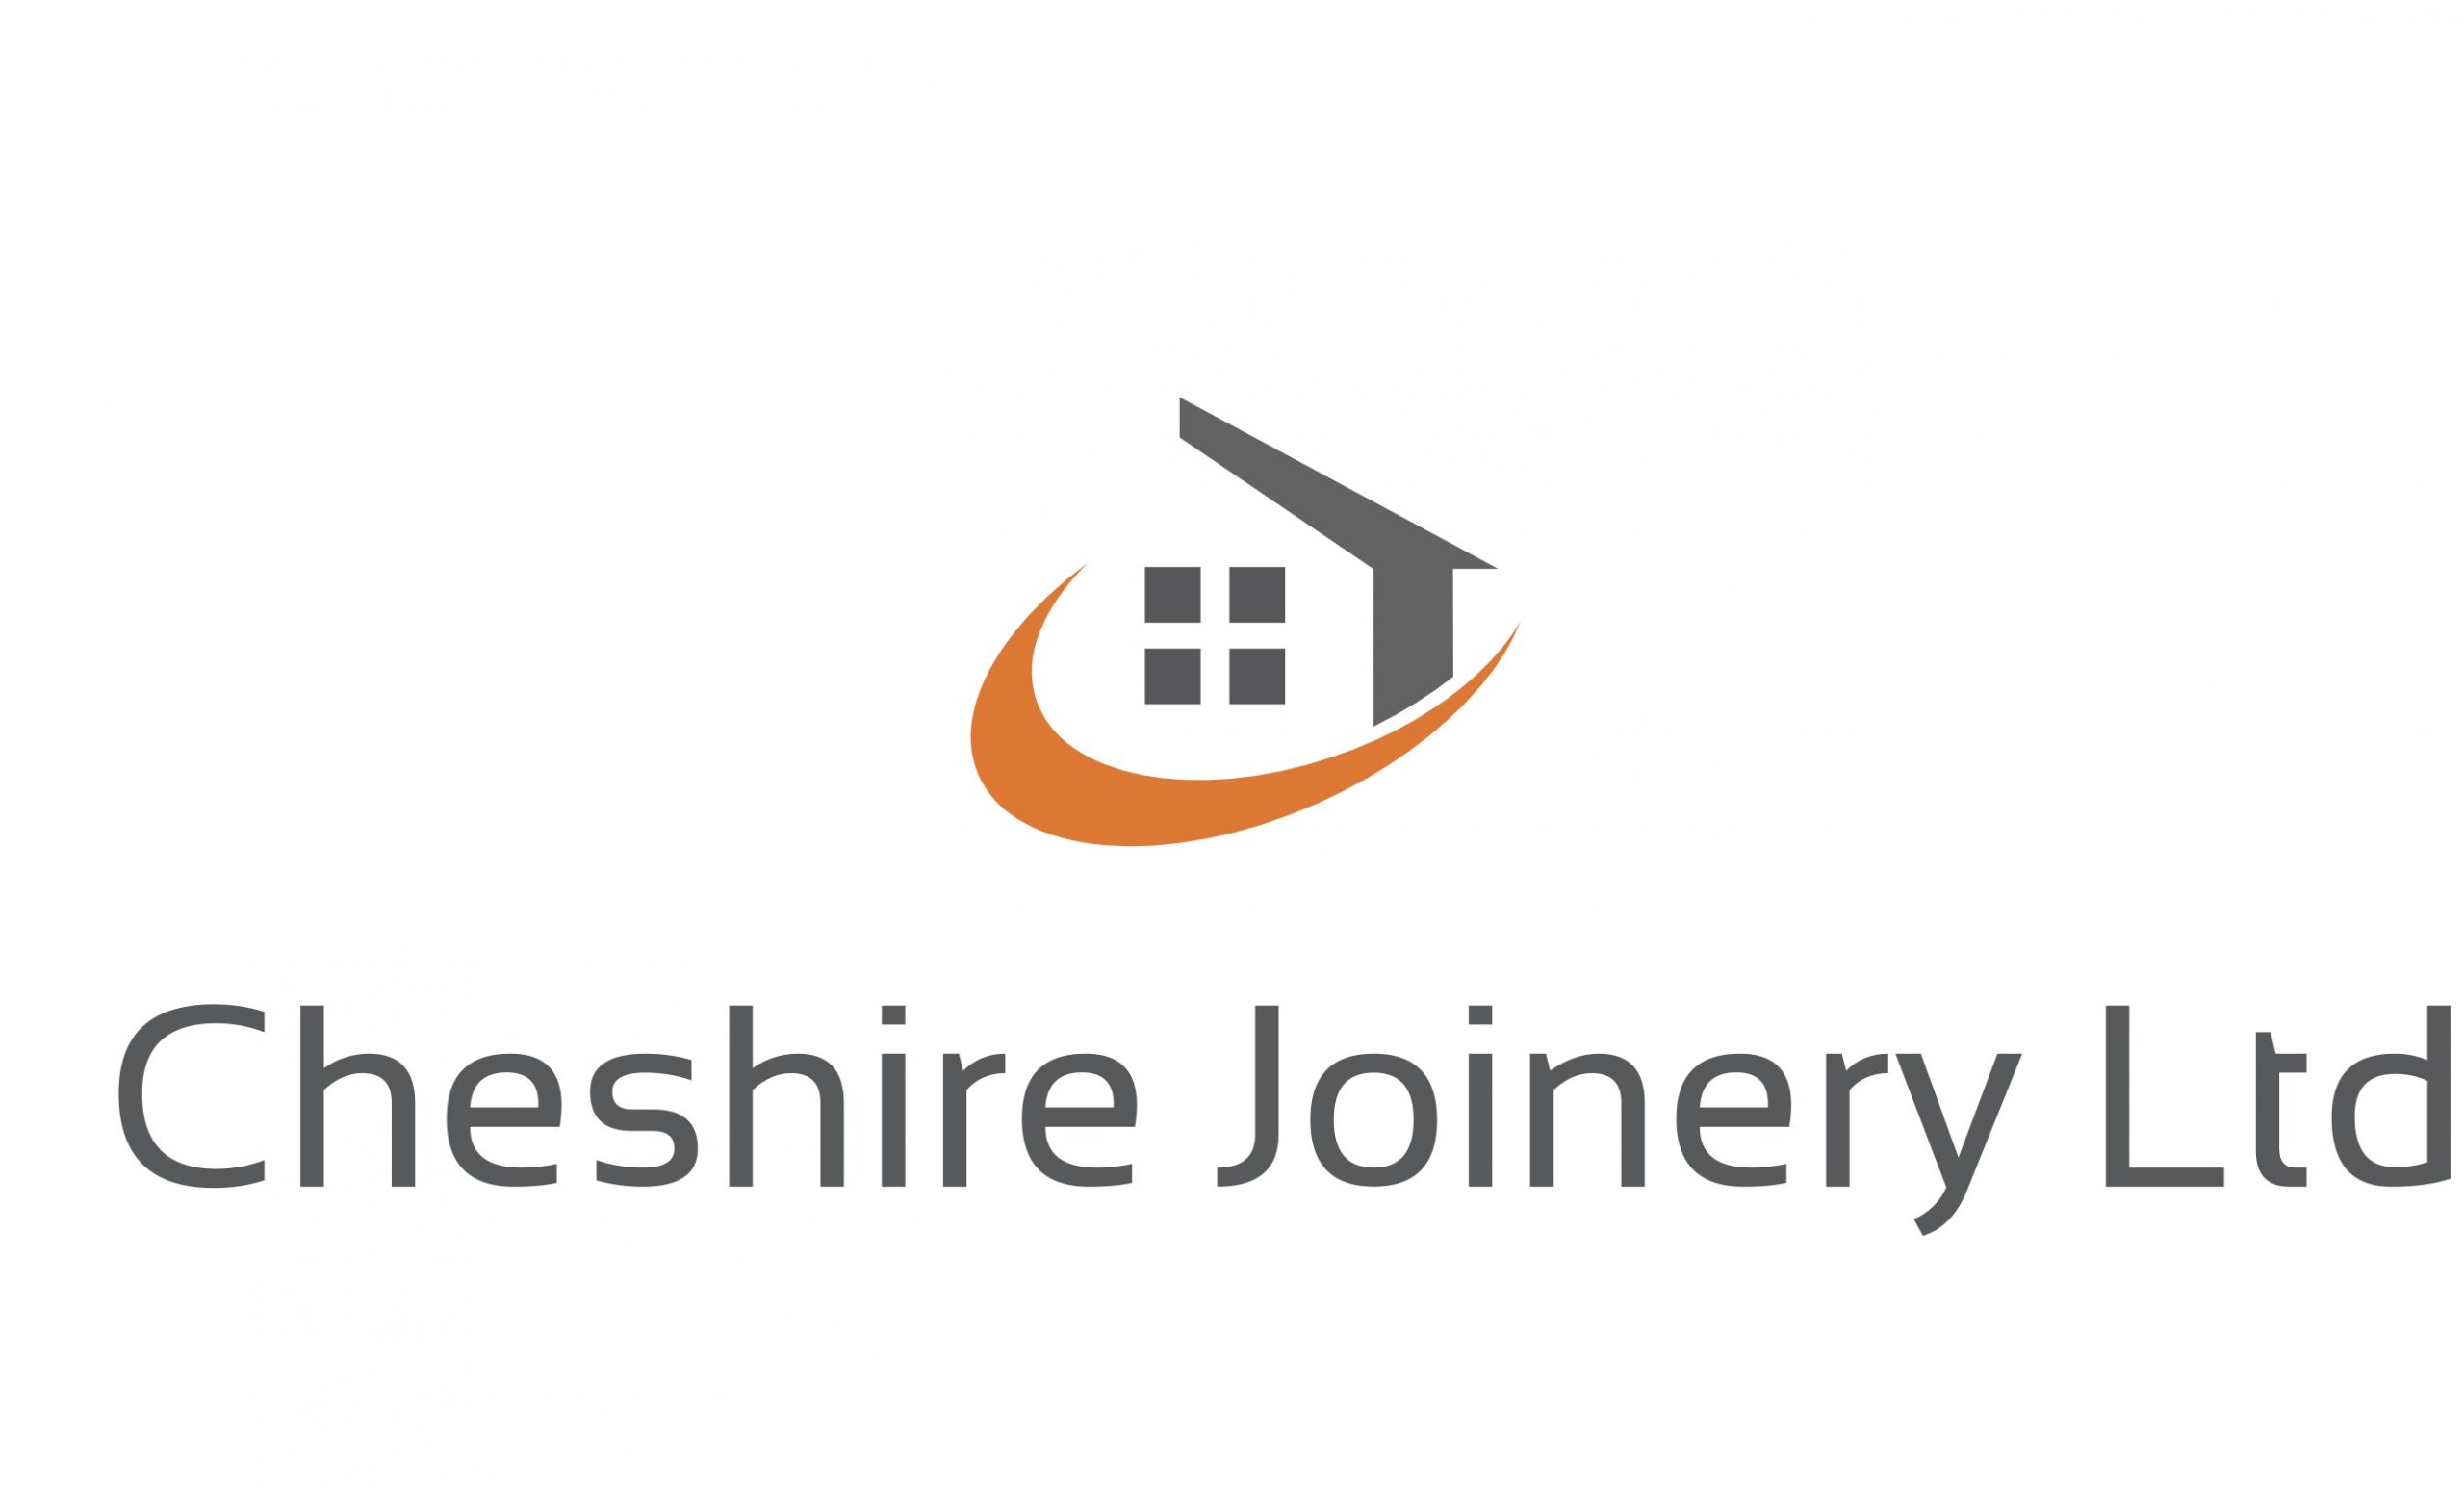 Cheshire Joinery Ltd logo